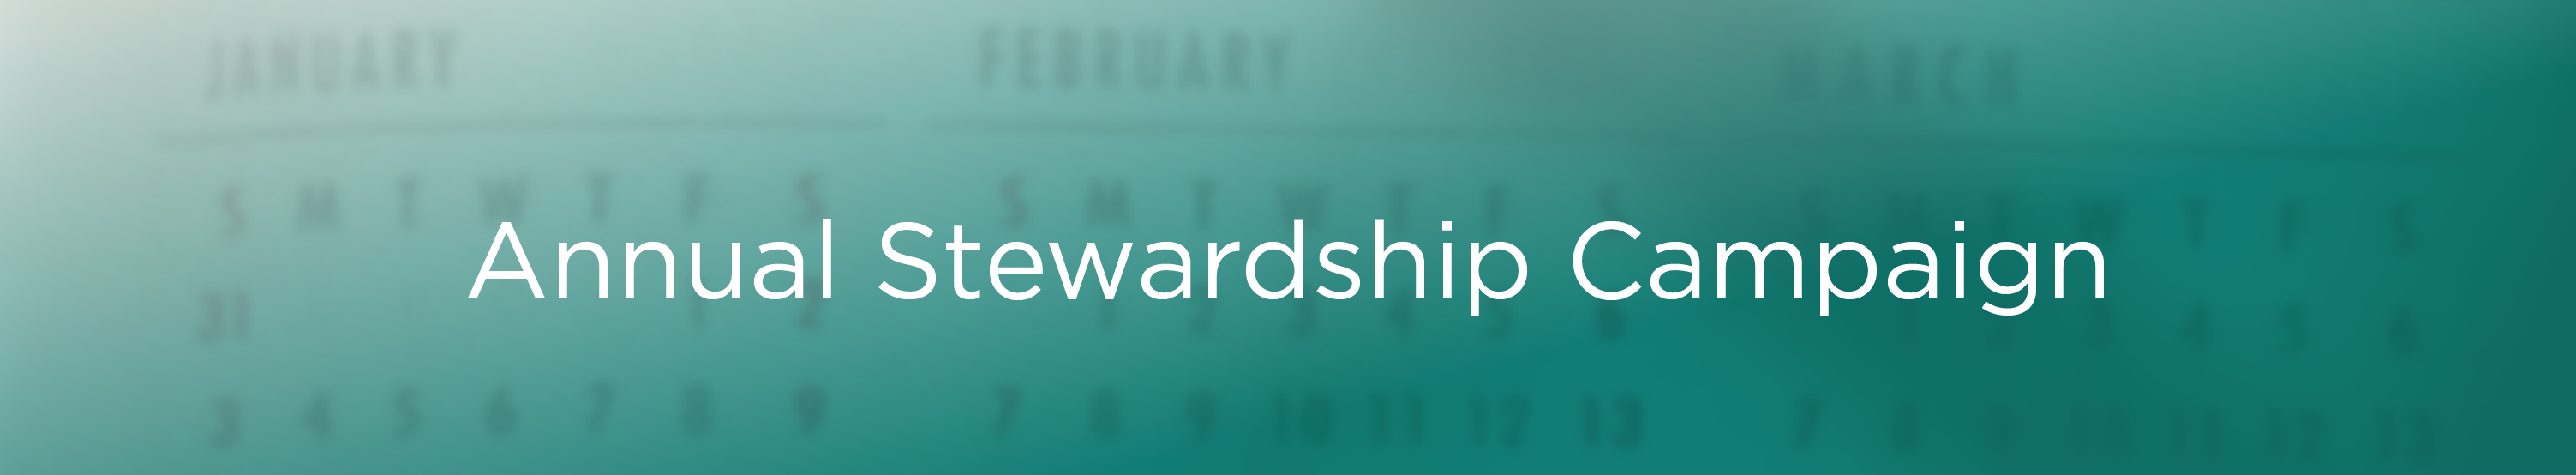 Annual Stewardship_Web Header